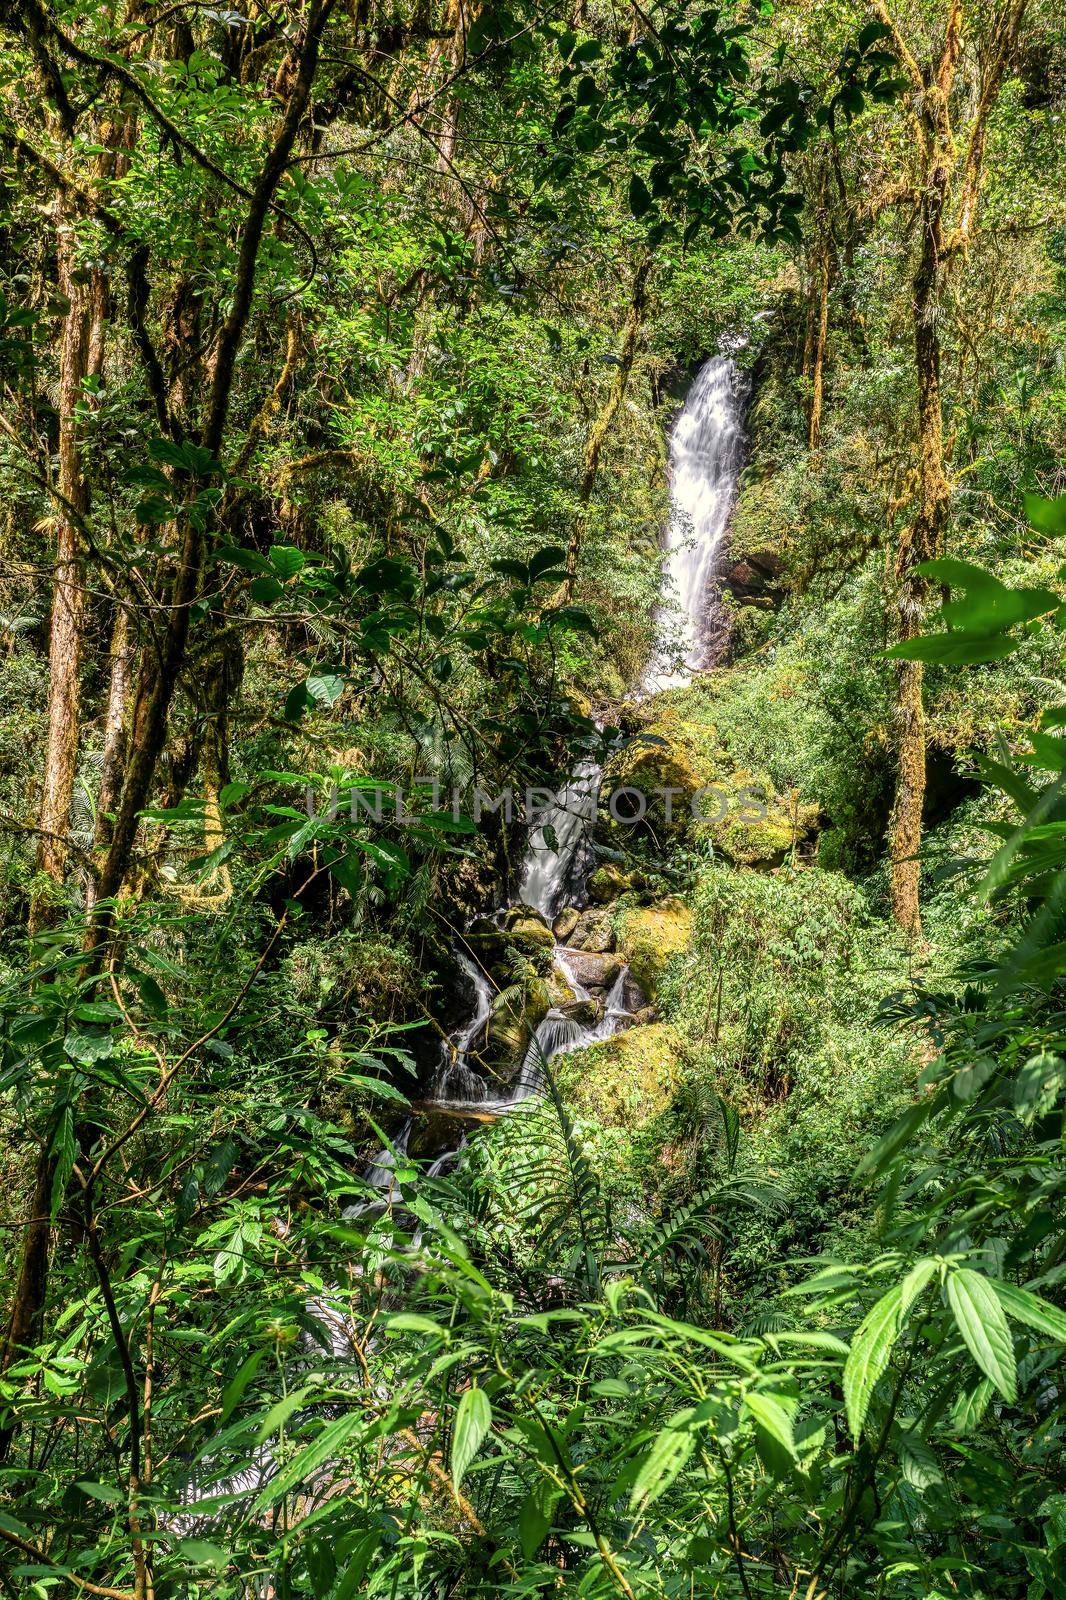 Waterfall on wild mountain river. San Gerardo de Dota, Costa Rica. by artush